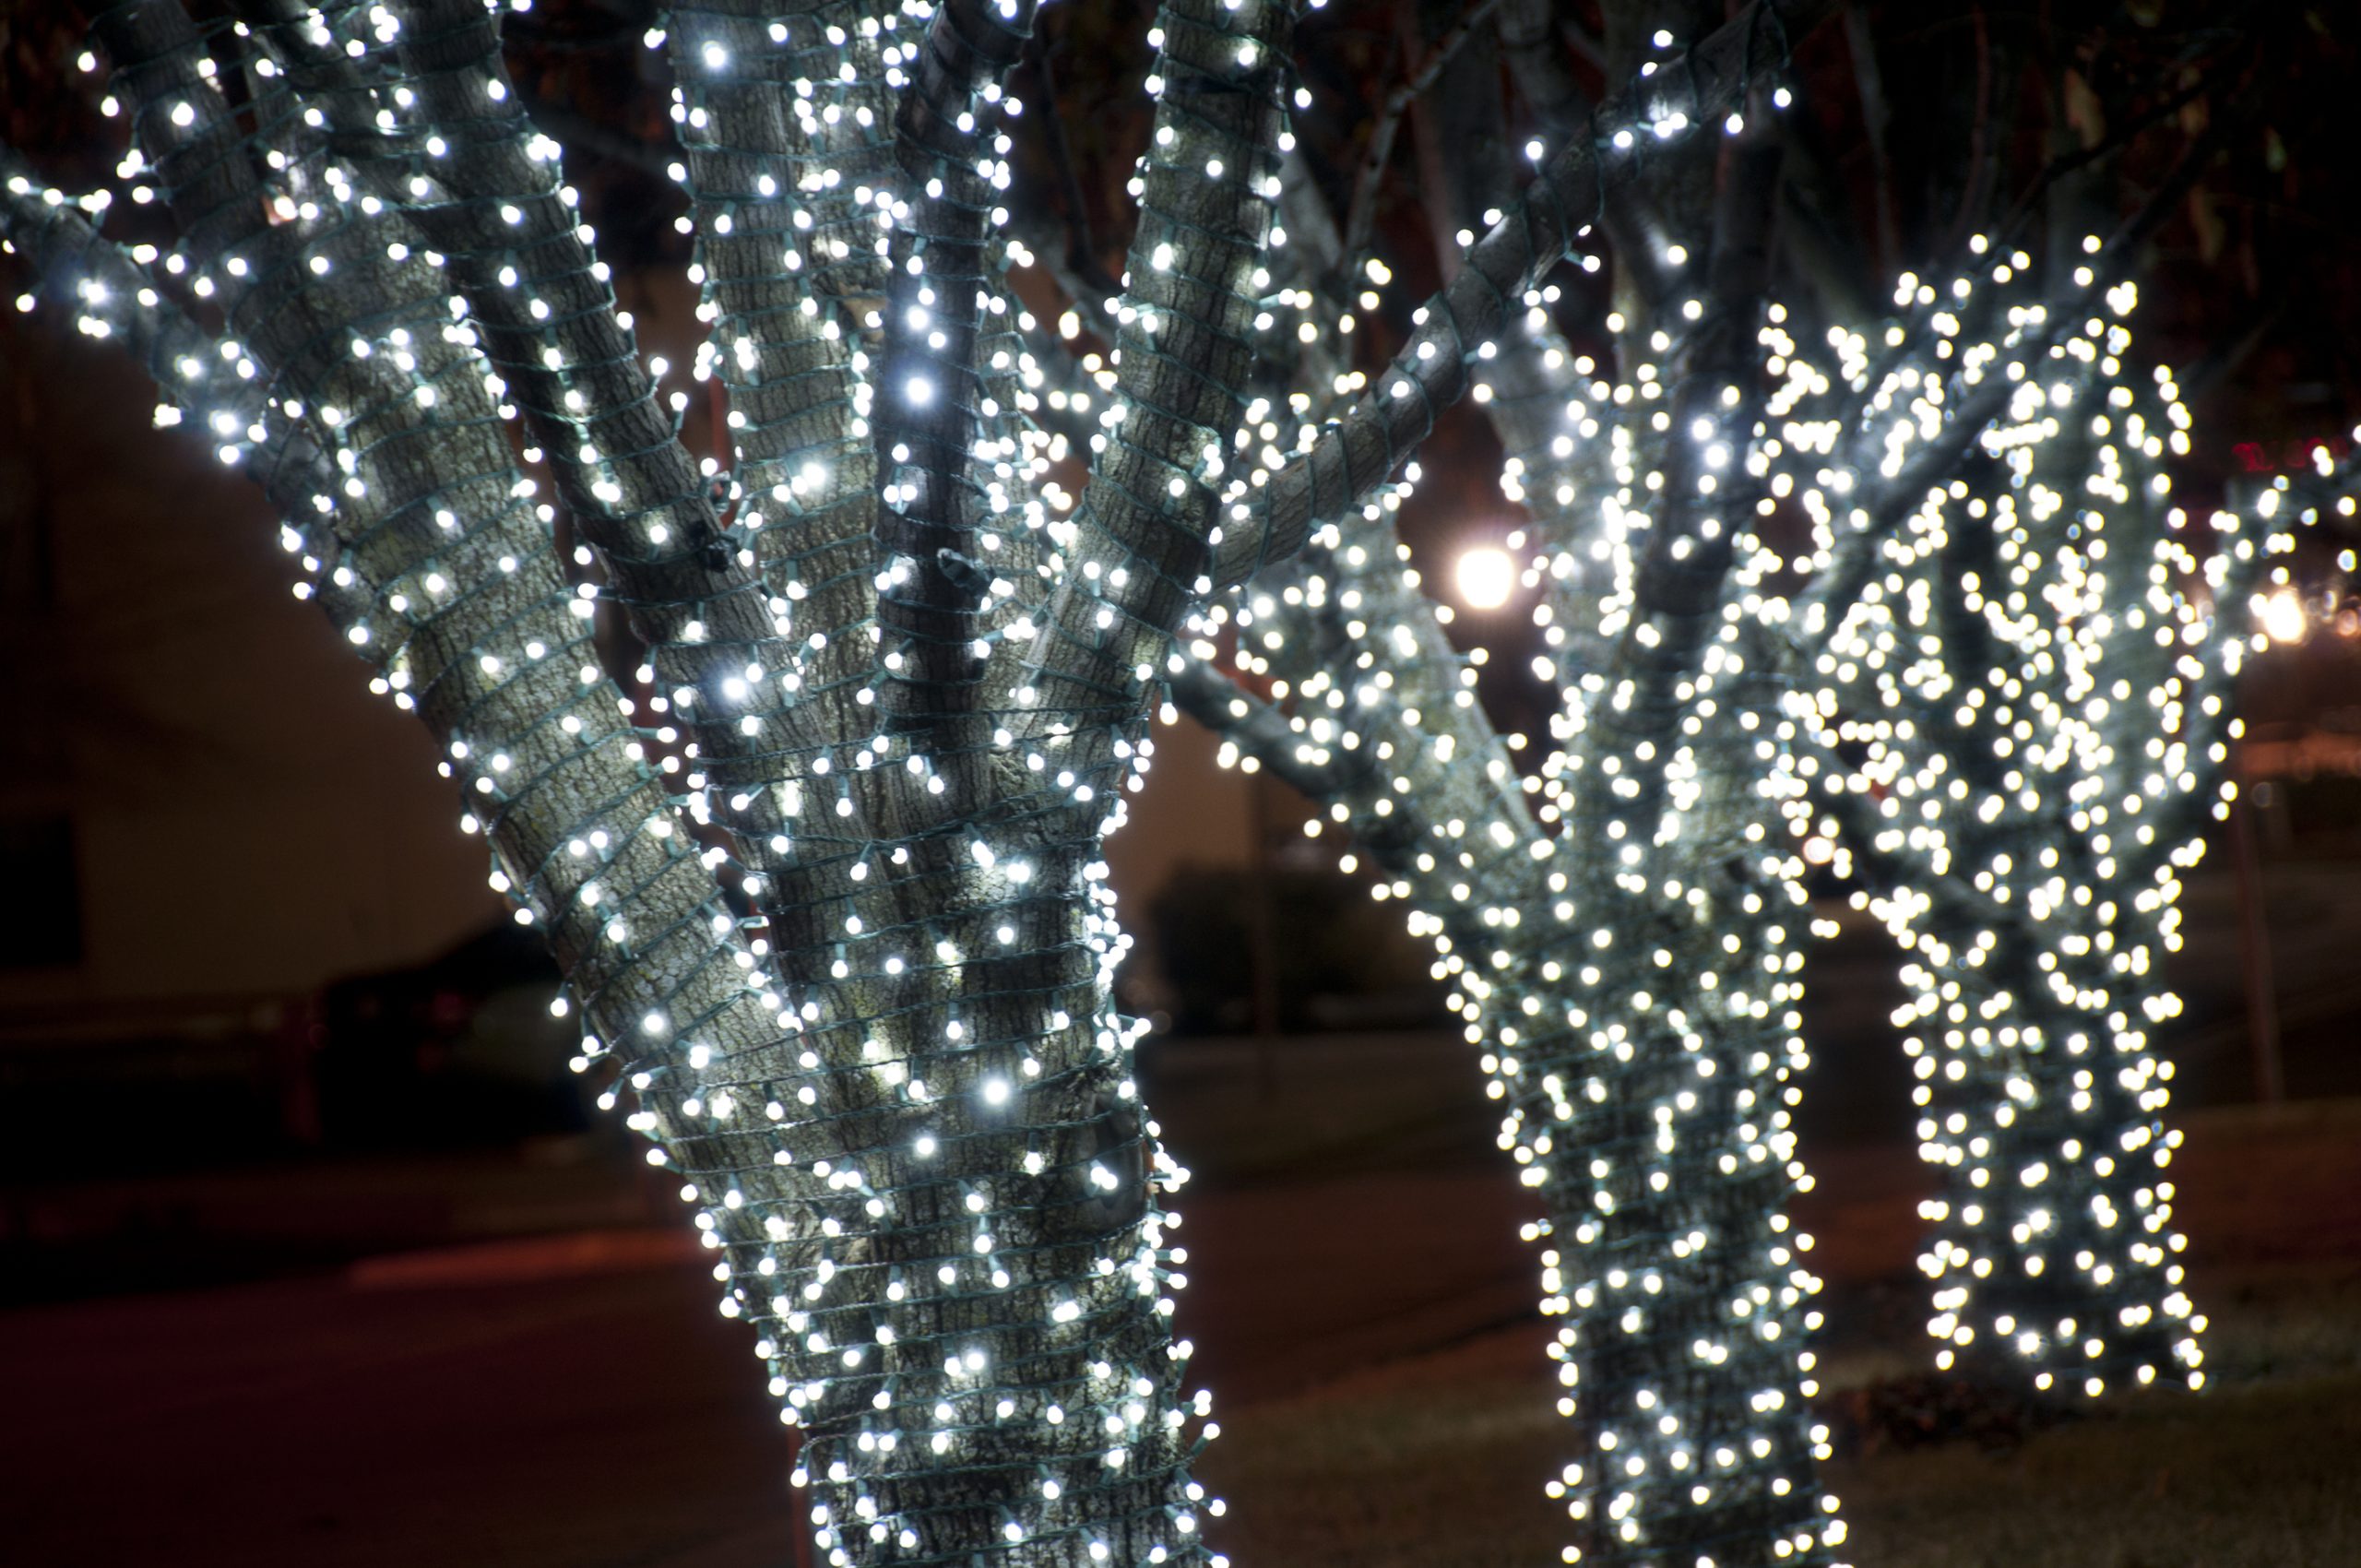 Outdoor Christmas Lights on Tree Trunks